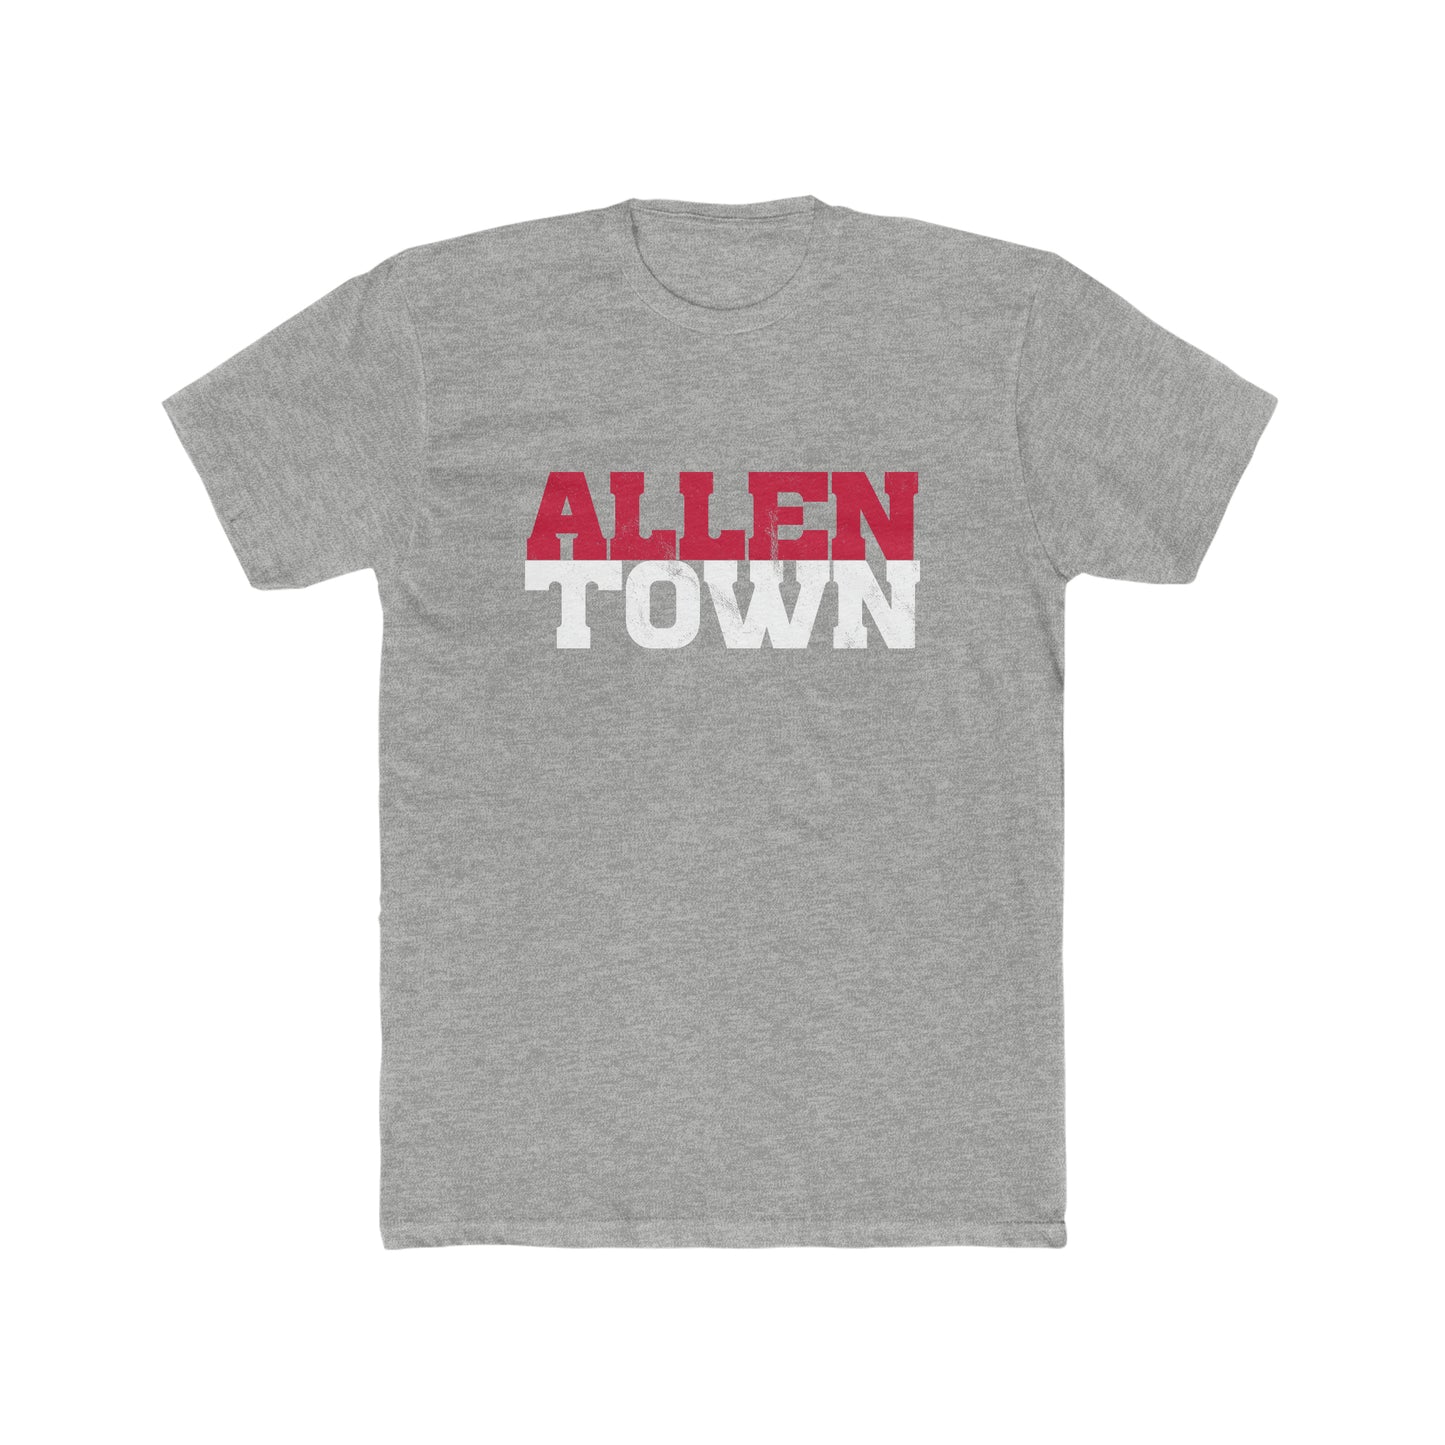 Buffalo Bills Mafia Shirt - Josh Allen Town! - Men's Cotton Crew Tee